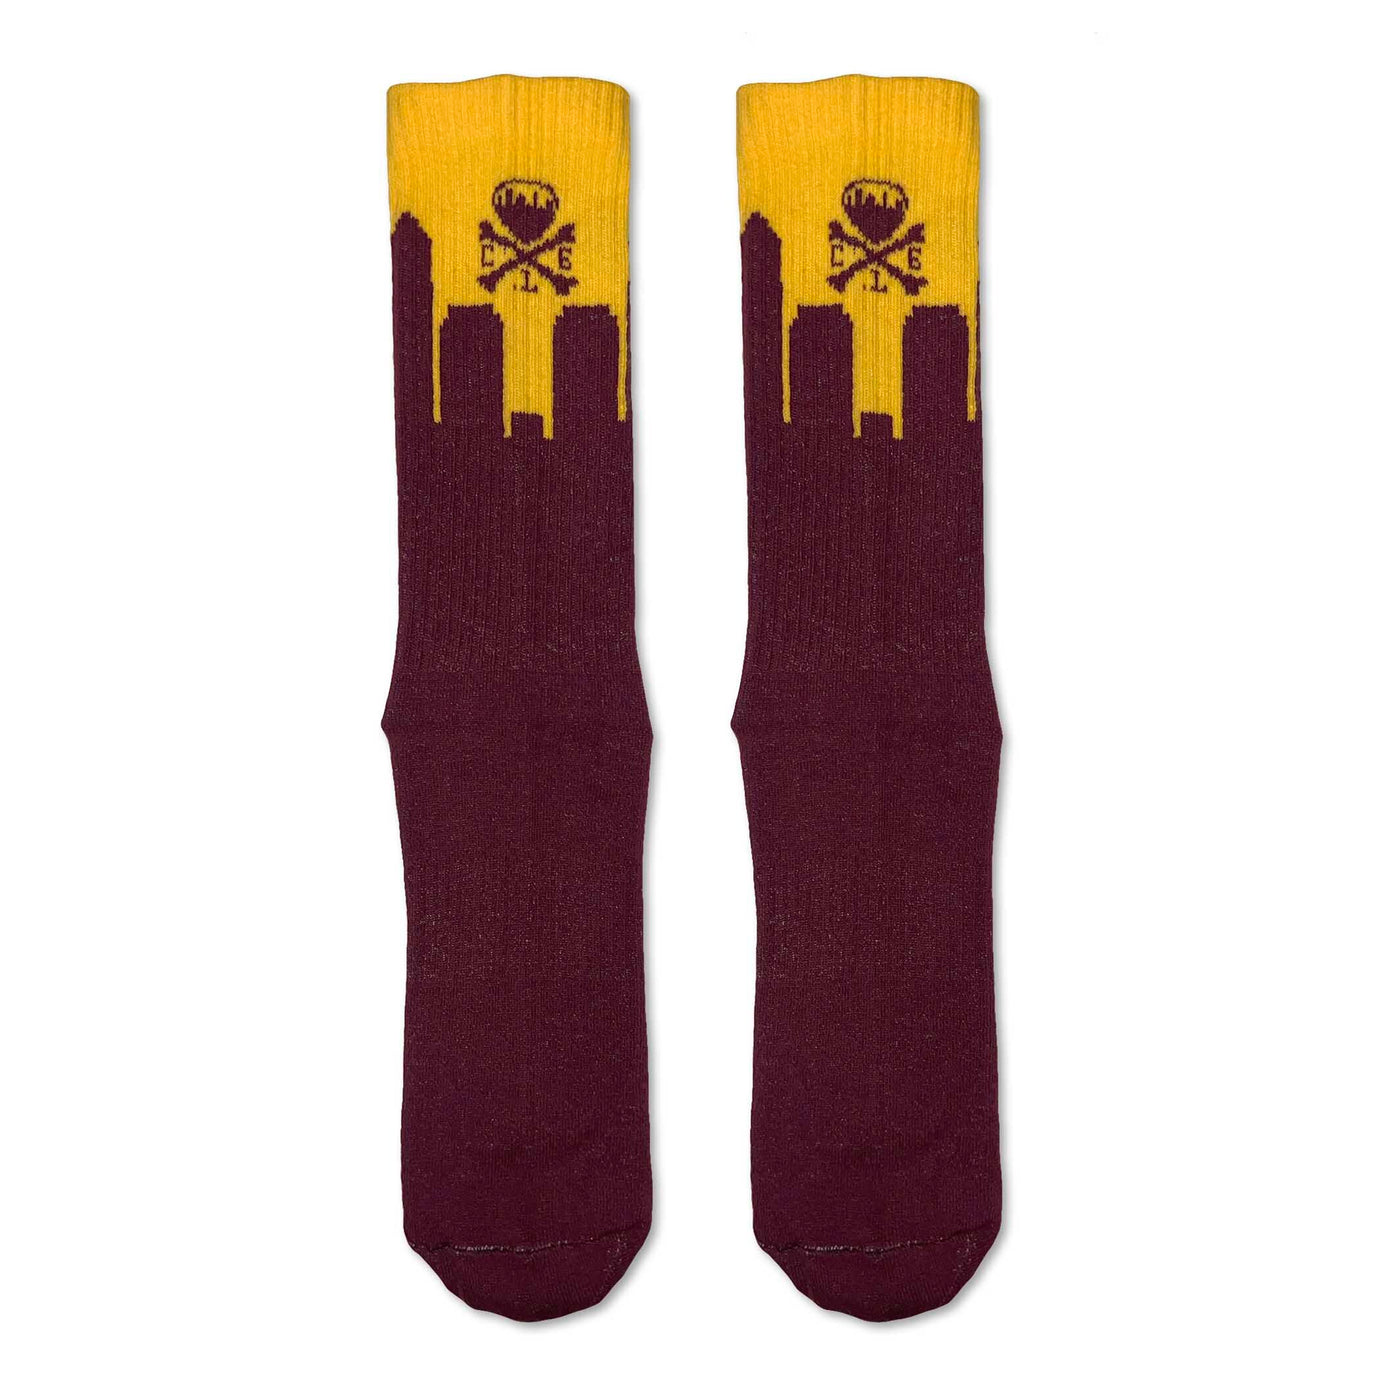 Cleveland Skyline Socks - Wine/Gold